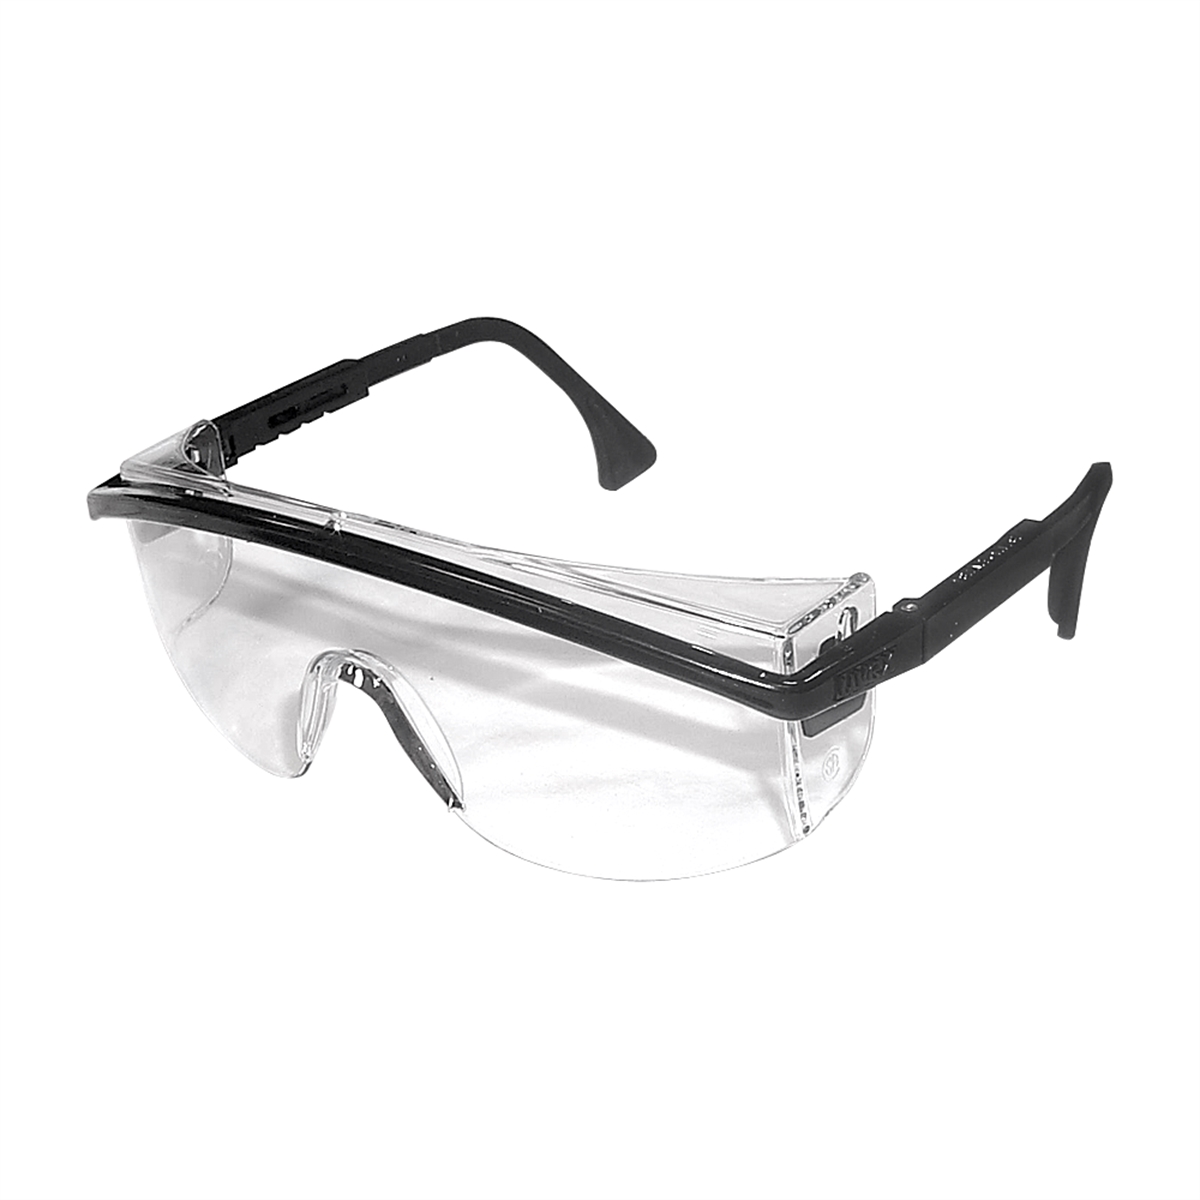 Duoflex Safety Glasses - Astrospec 3000 - Black/Clear Lens